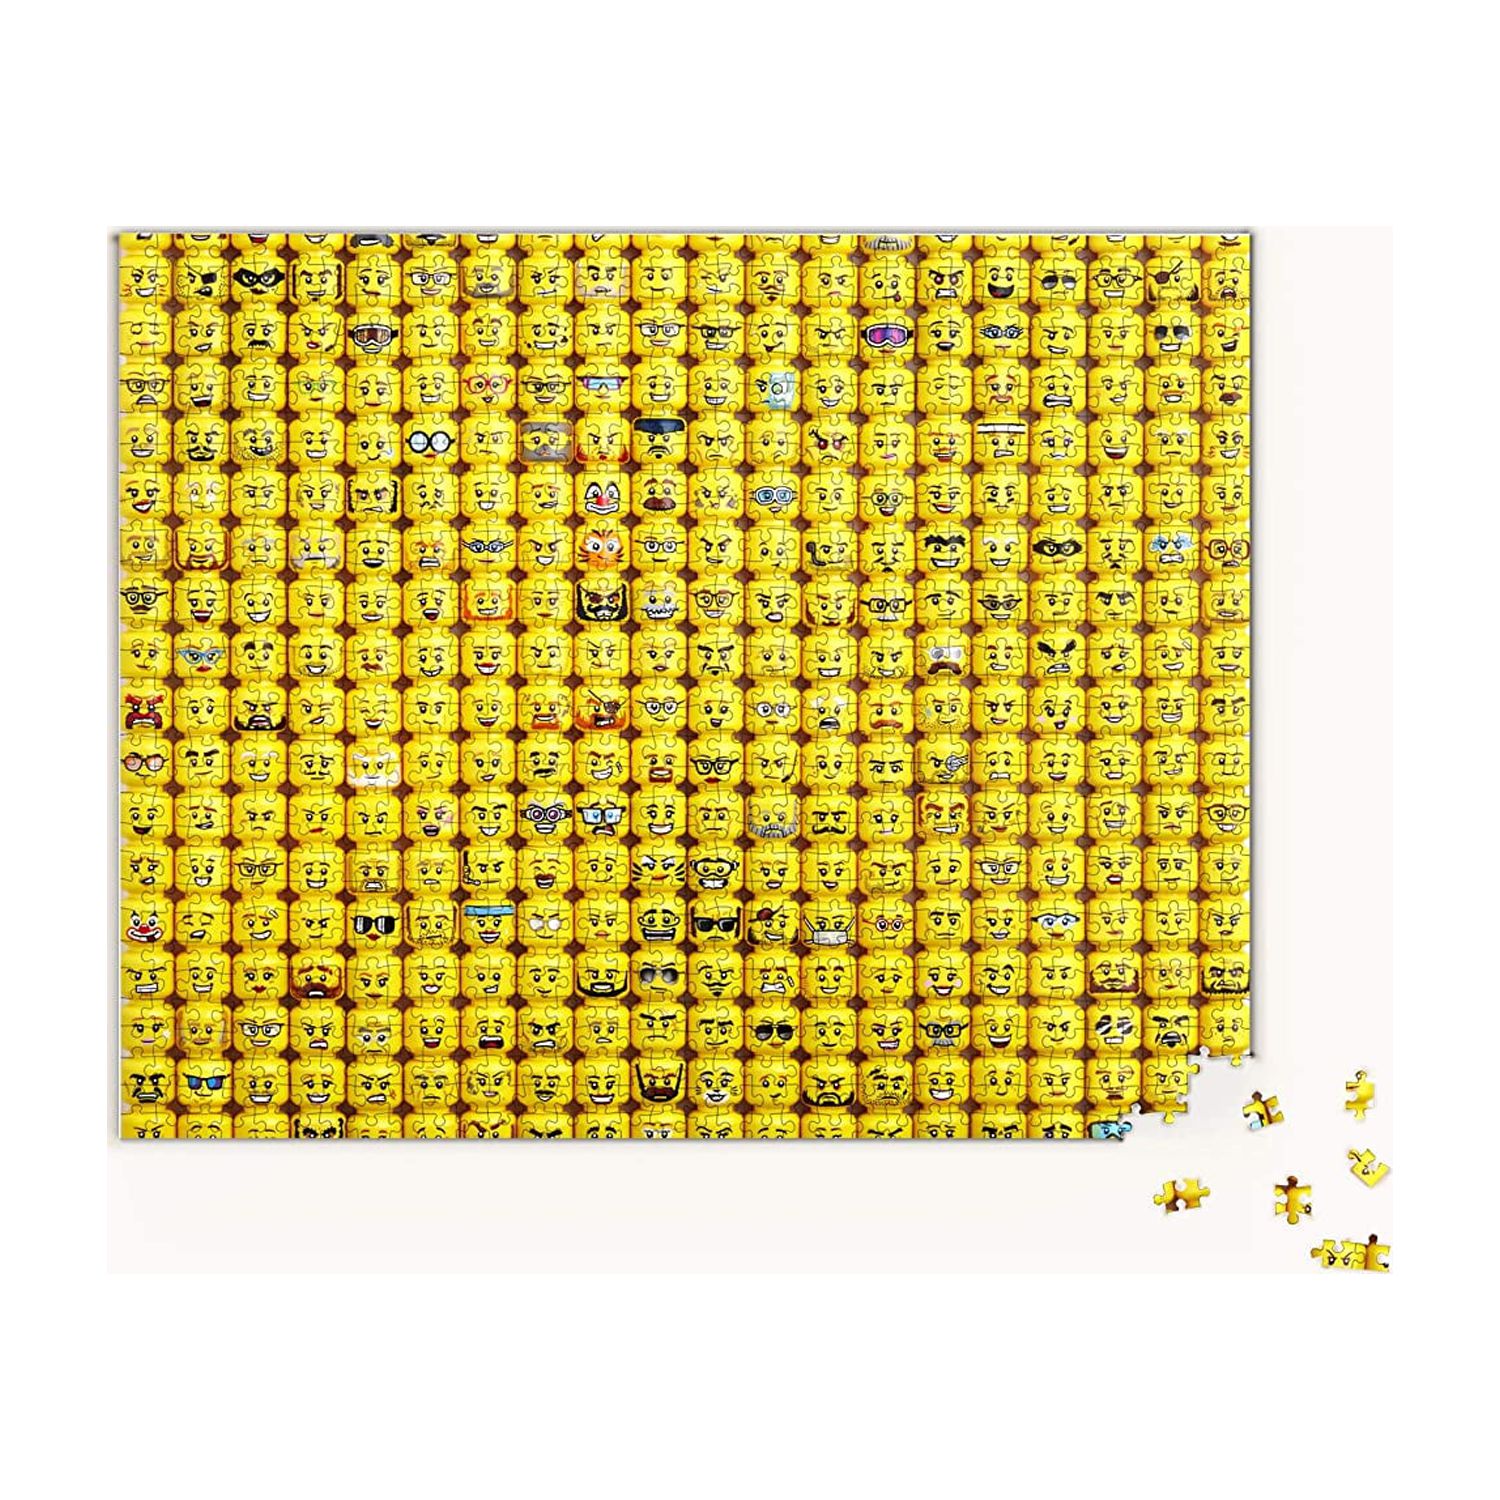 Lego: LEGO Minifigure Faces 1000-Piece Puzzle (Jigsaw) - image 2 of 3